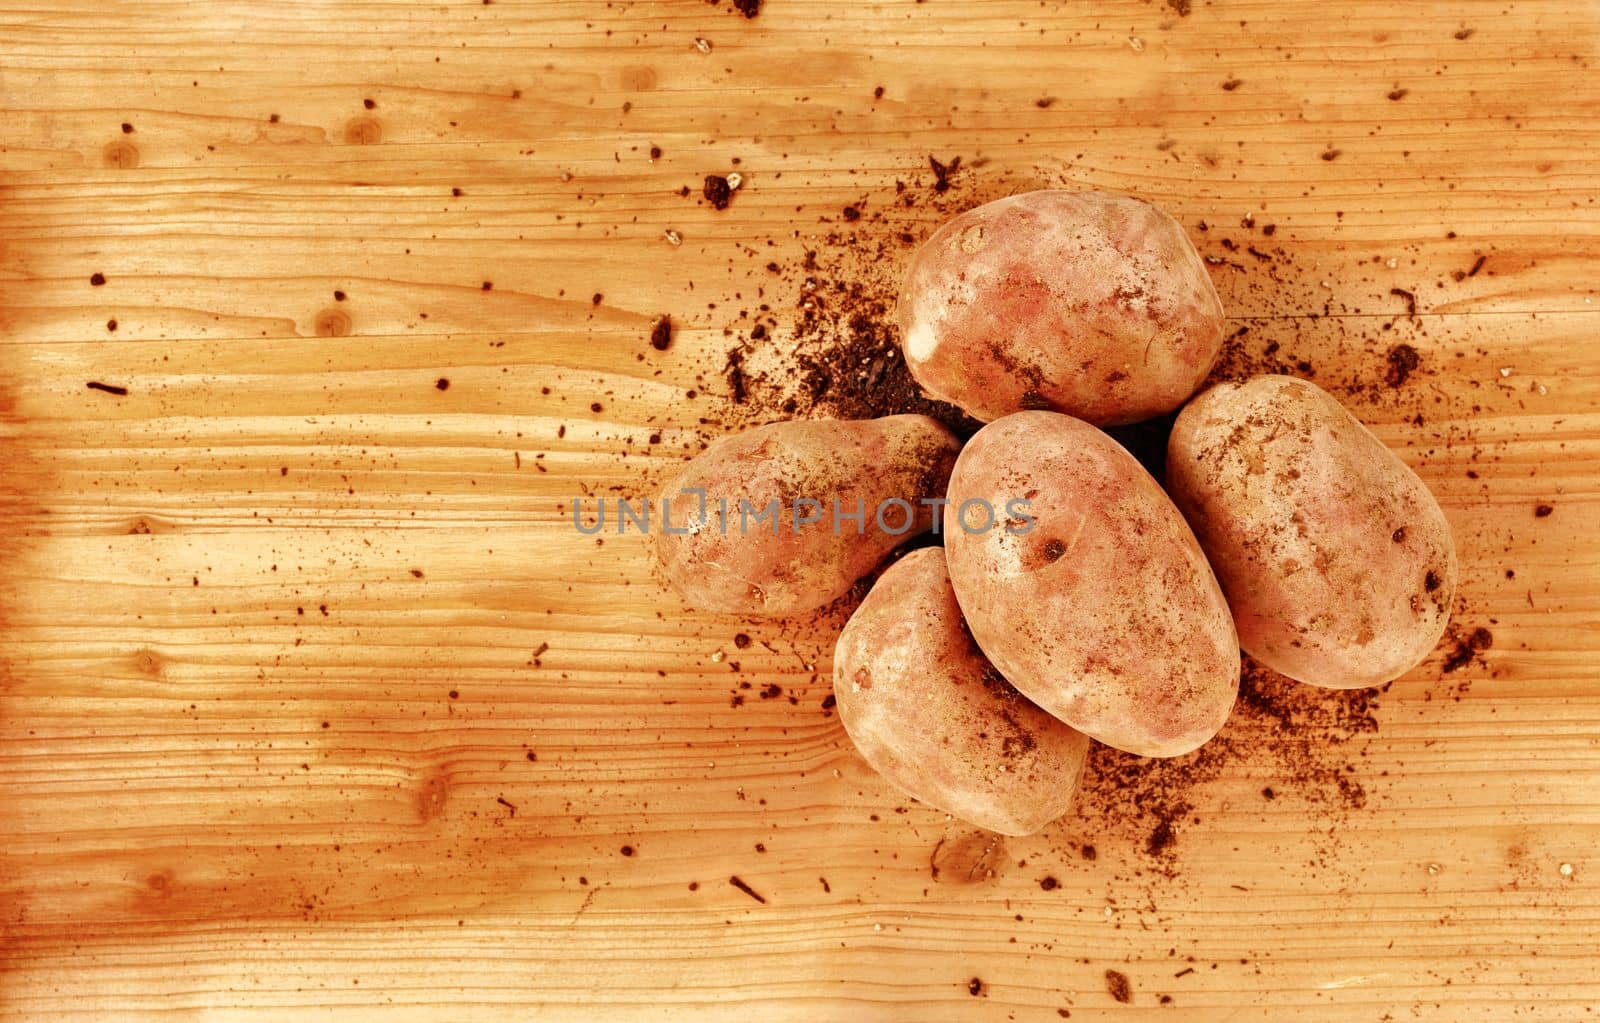 Freshly potatoes on wooden table  by victimewalker